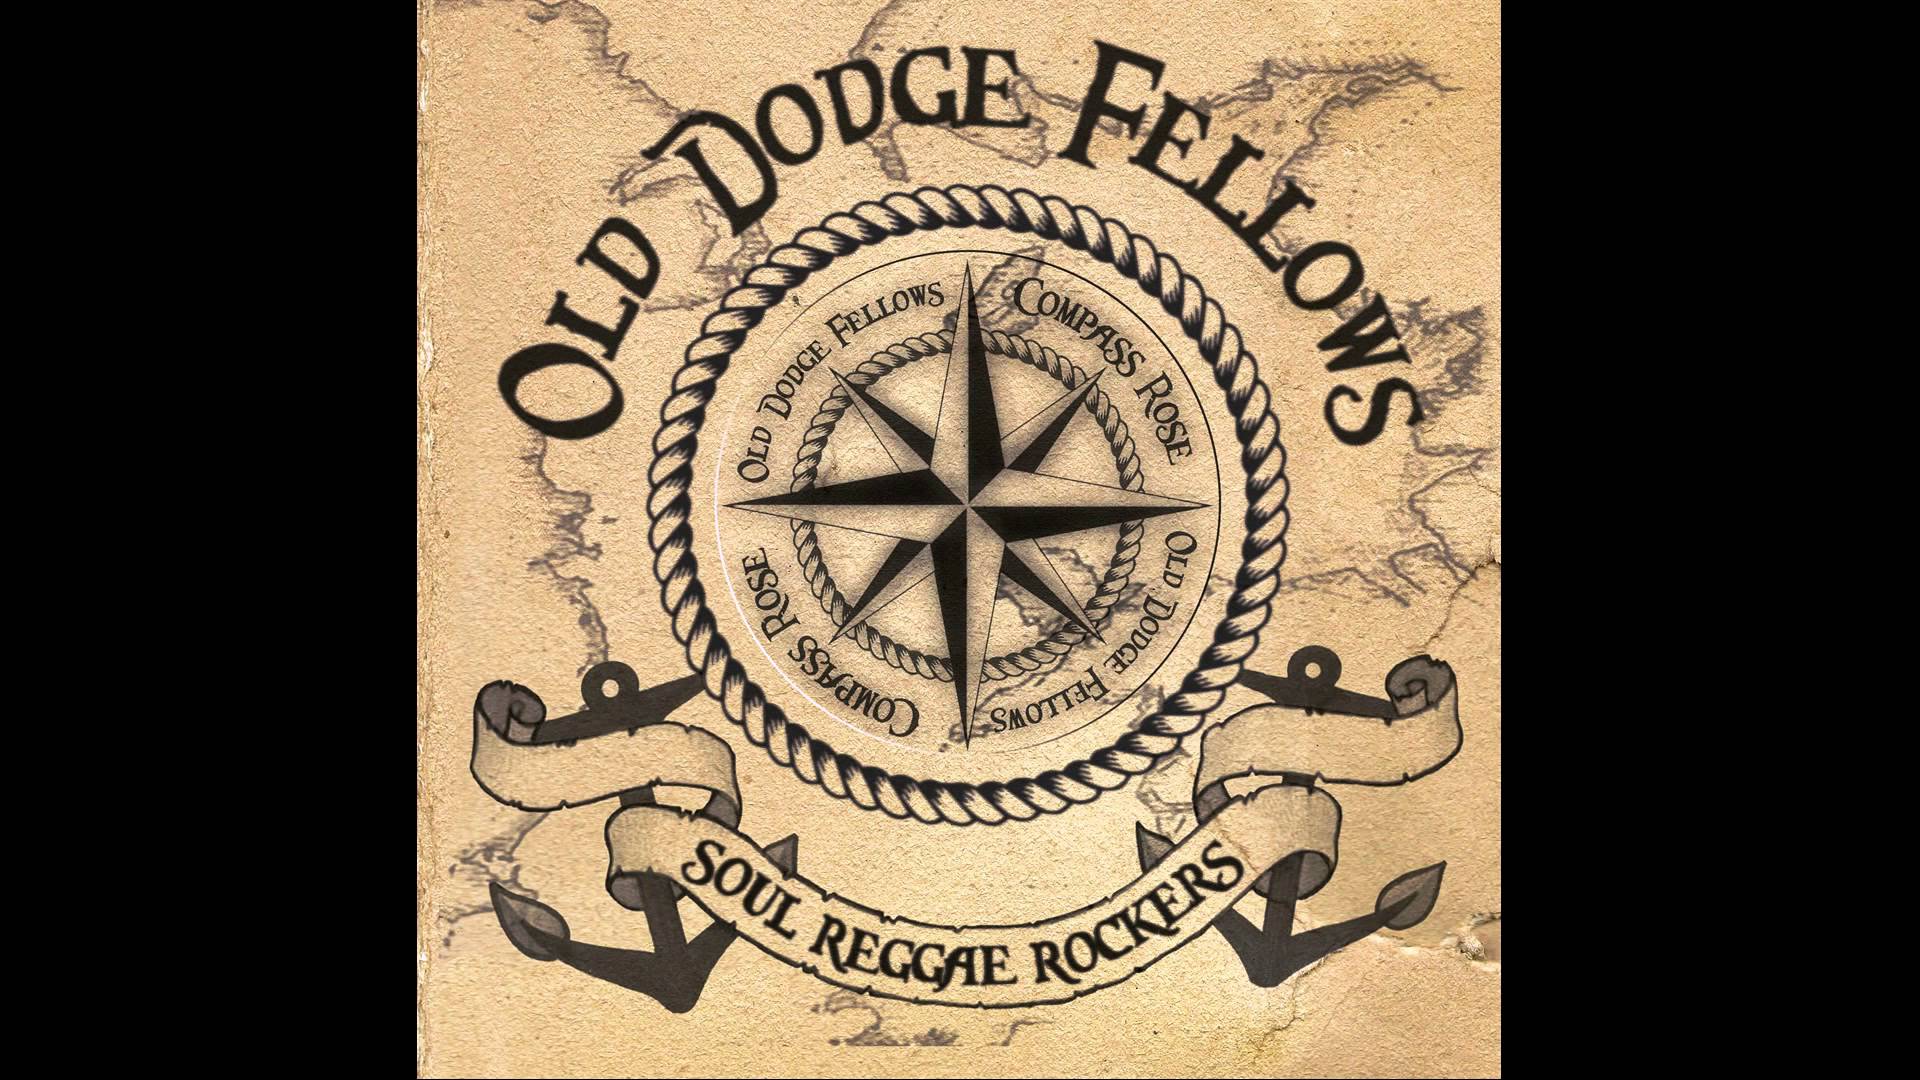 OLD DODGE FELLOWS "Soul reggae rockers" - 45T